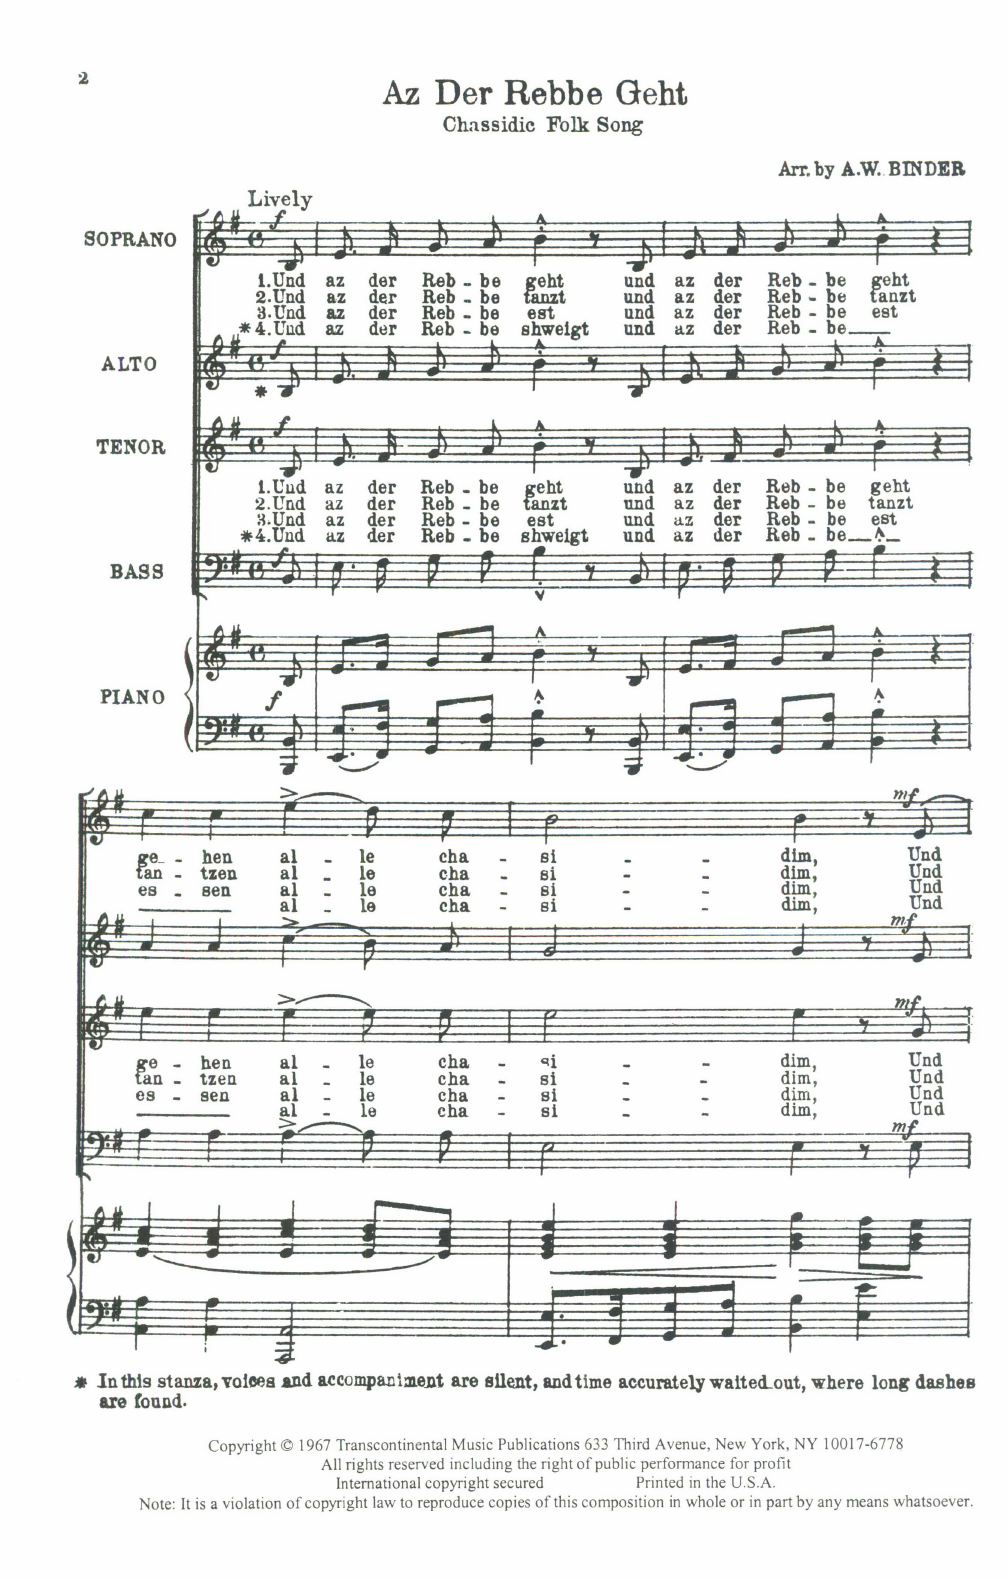 Chassidic Folk Song Az Der Rebbe Geht (arr. A.W. Binder) Sheet Music Notes & Chords for SATB Choir - Download or Print PDF